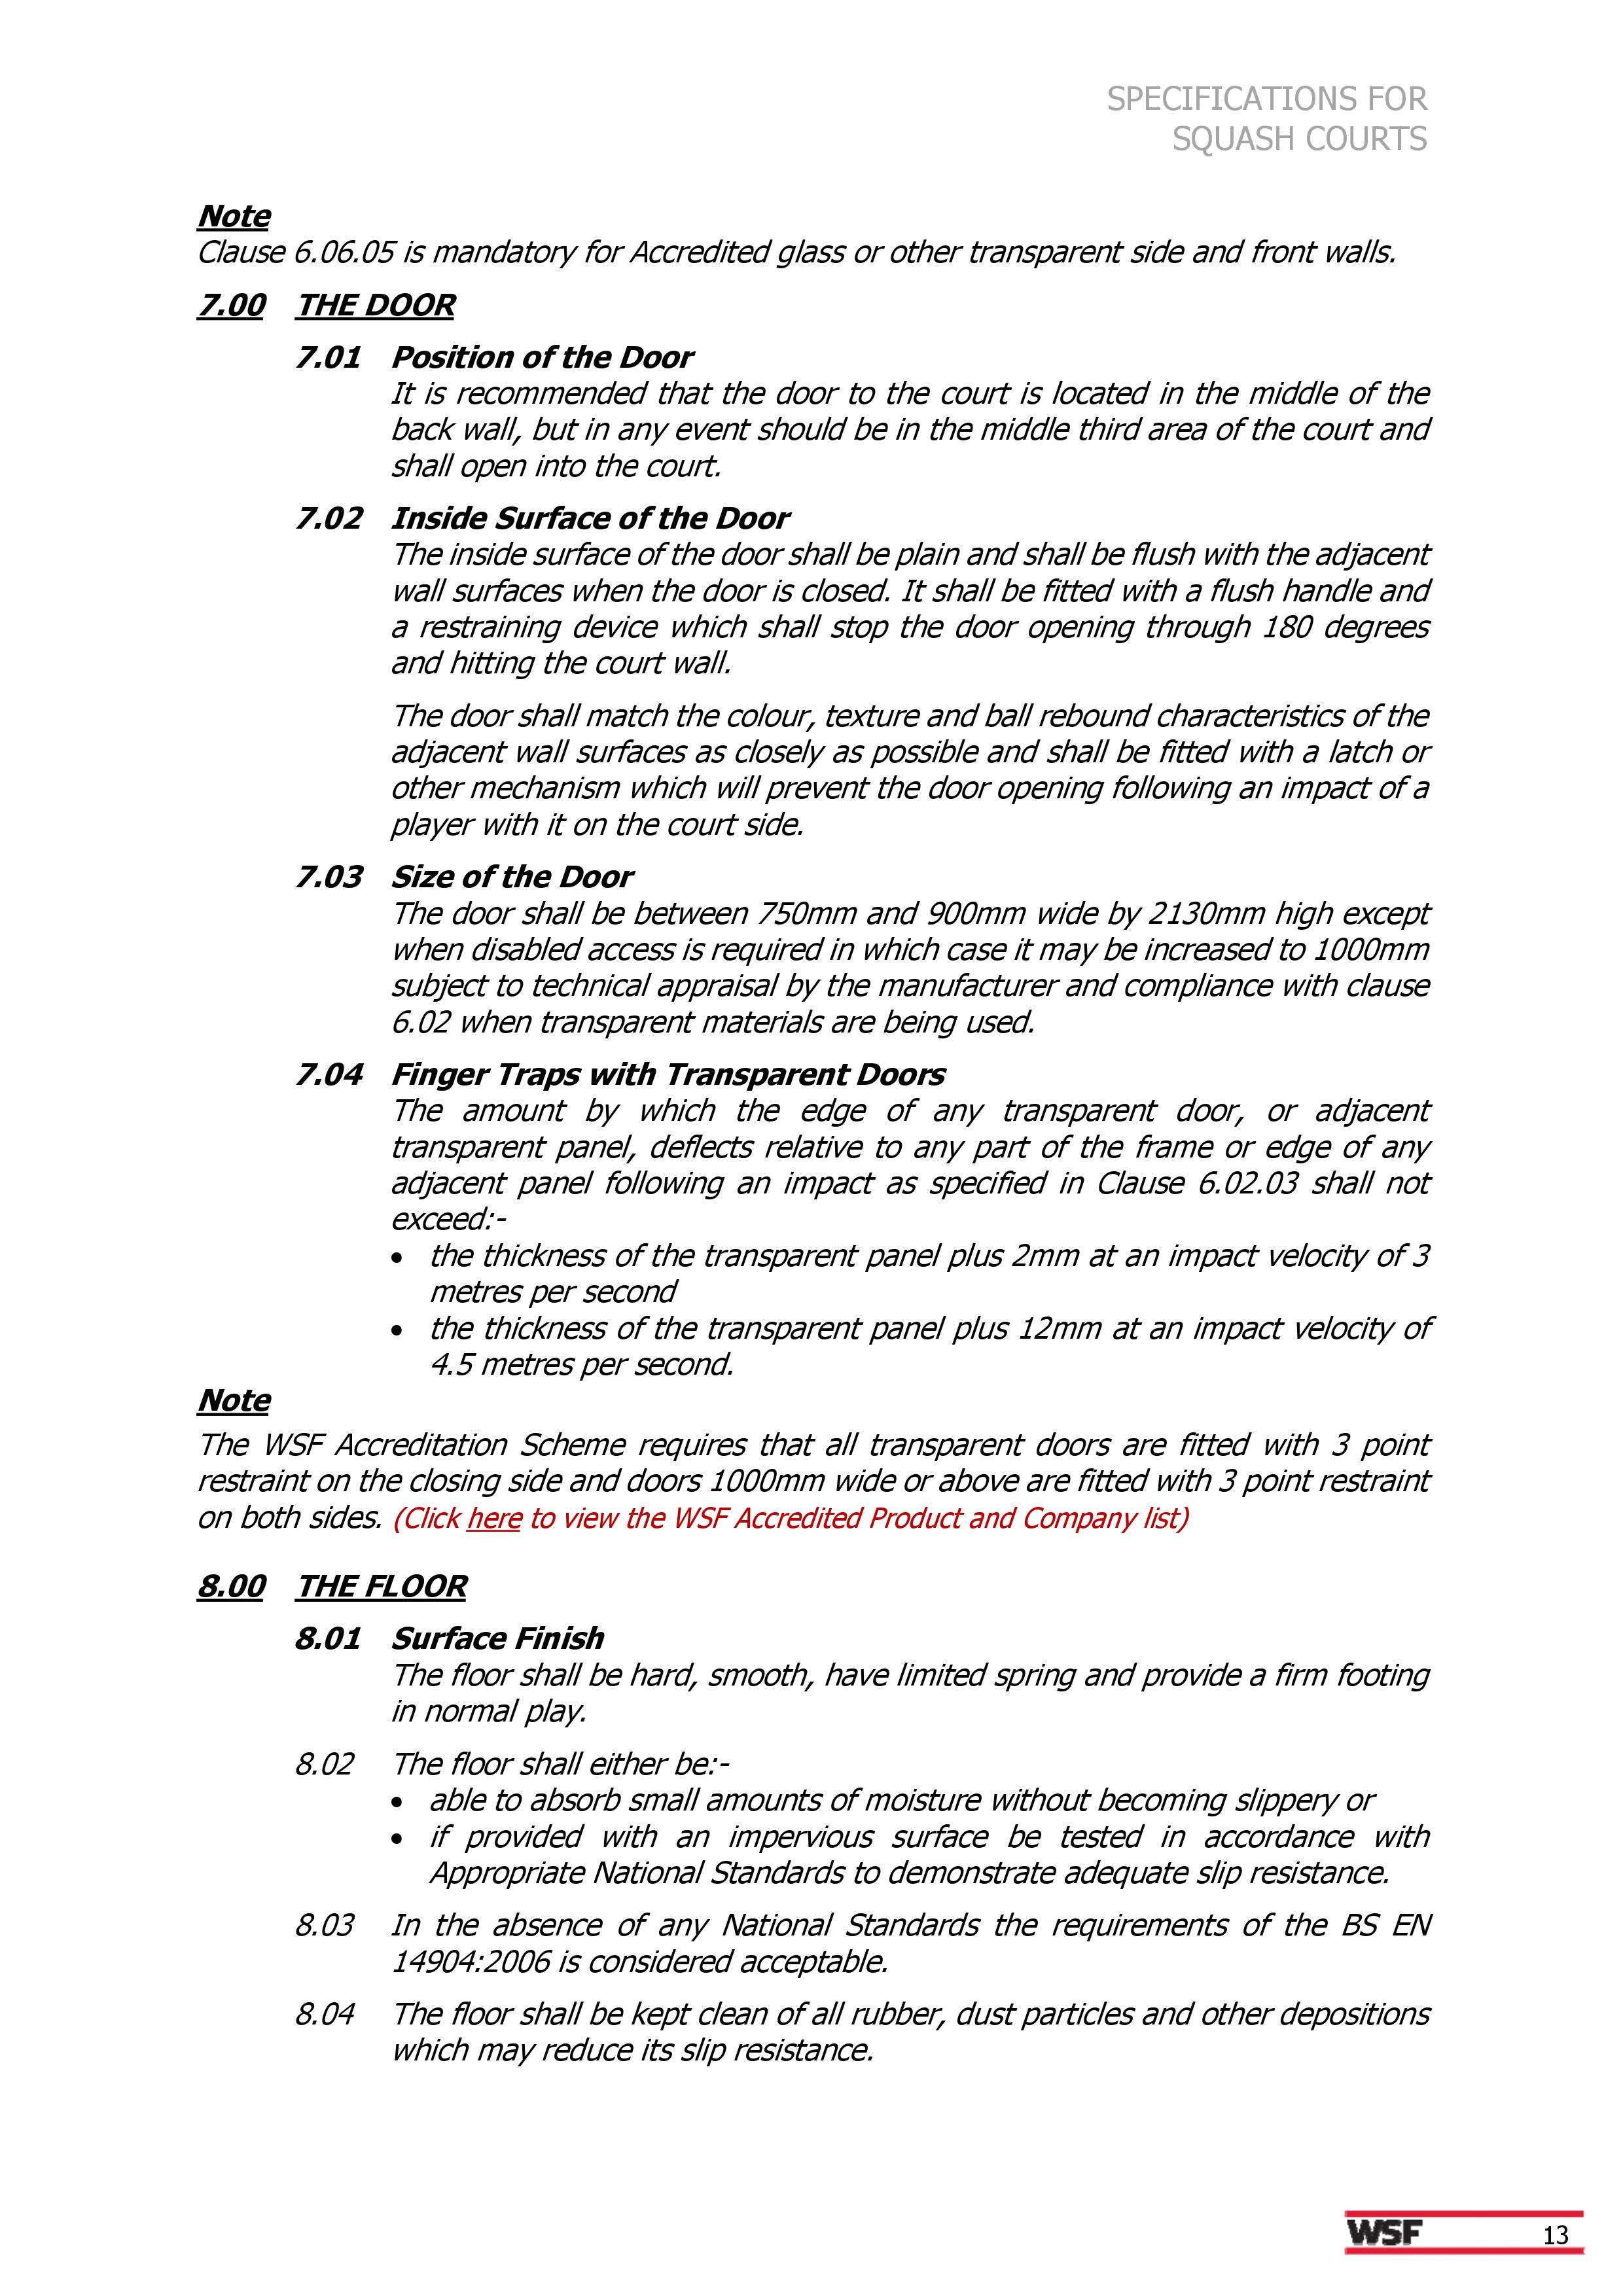 World Squash Federation Squash Court Specifications - Global Squash Coach - Page 15.jpg